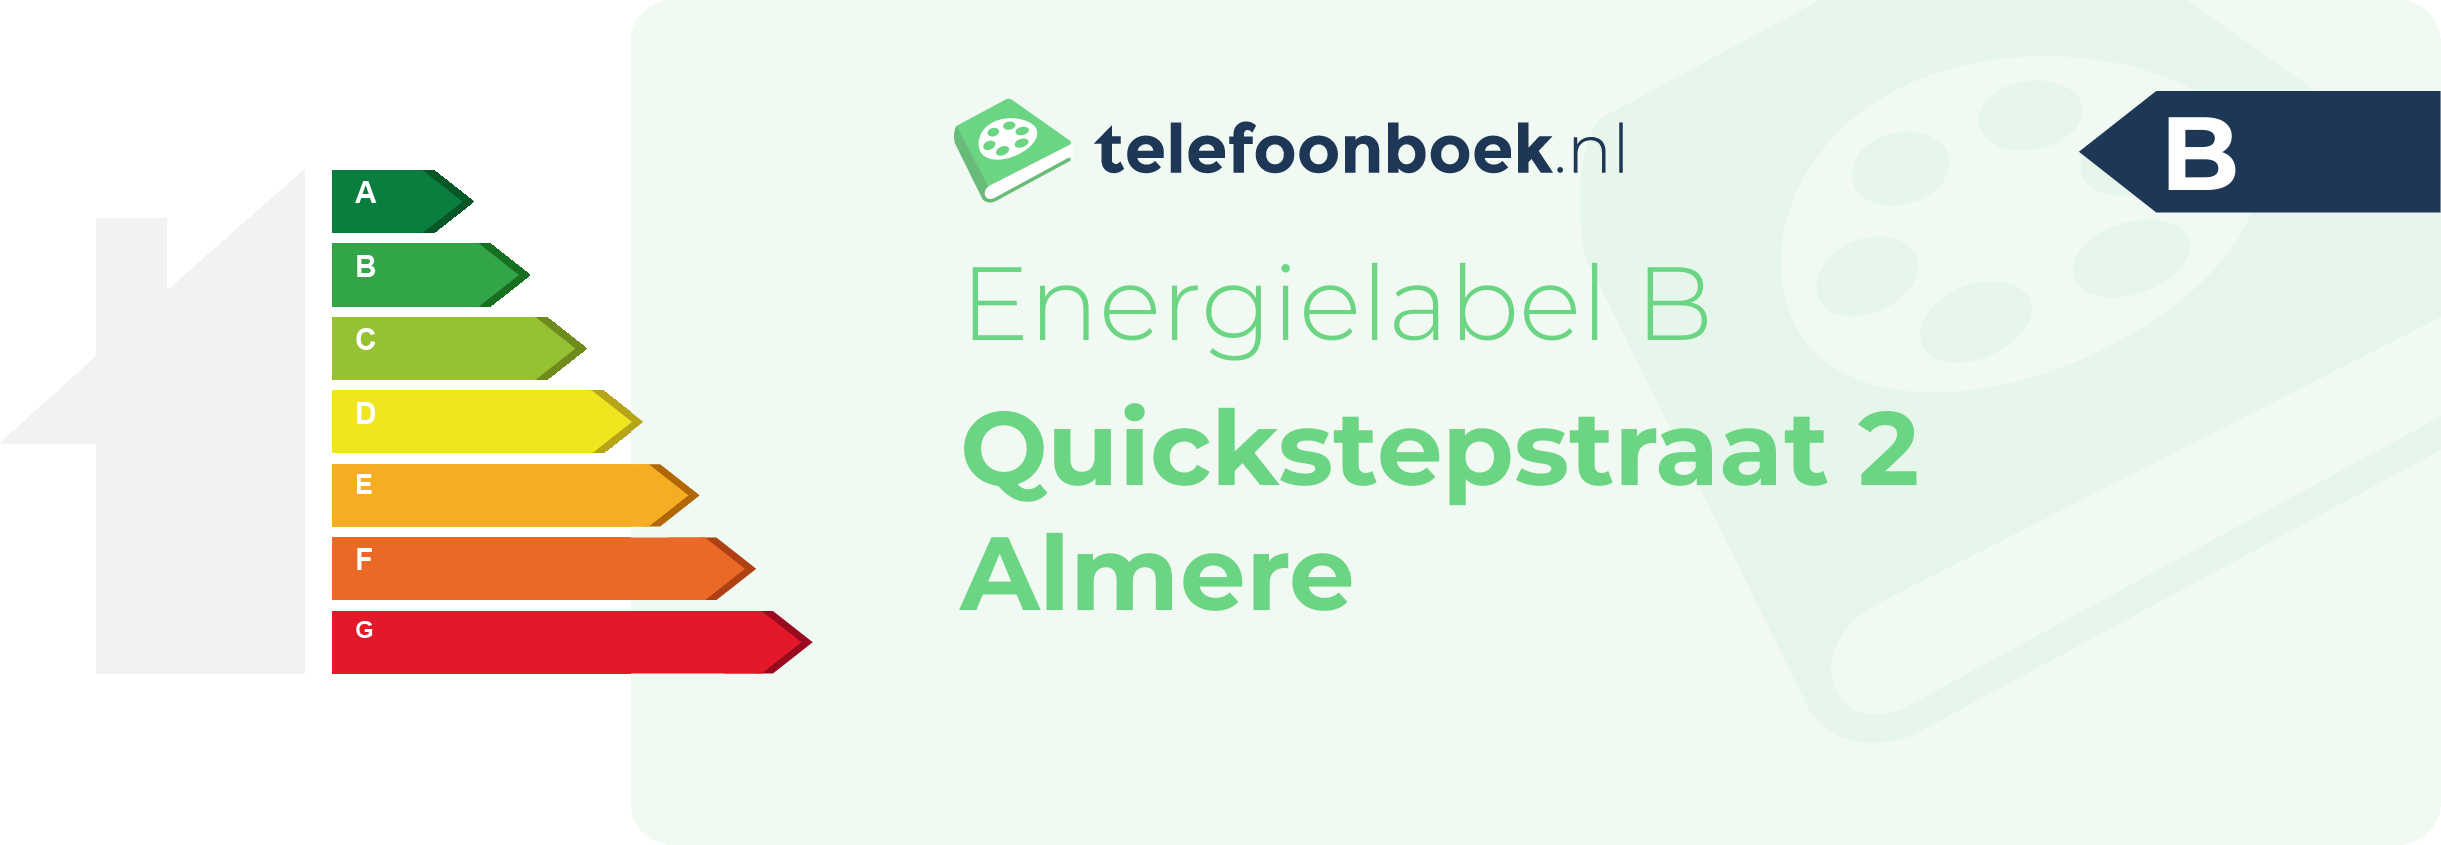 Energielabel Quickstepstraat 2 Almere